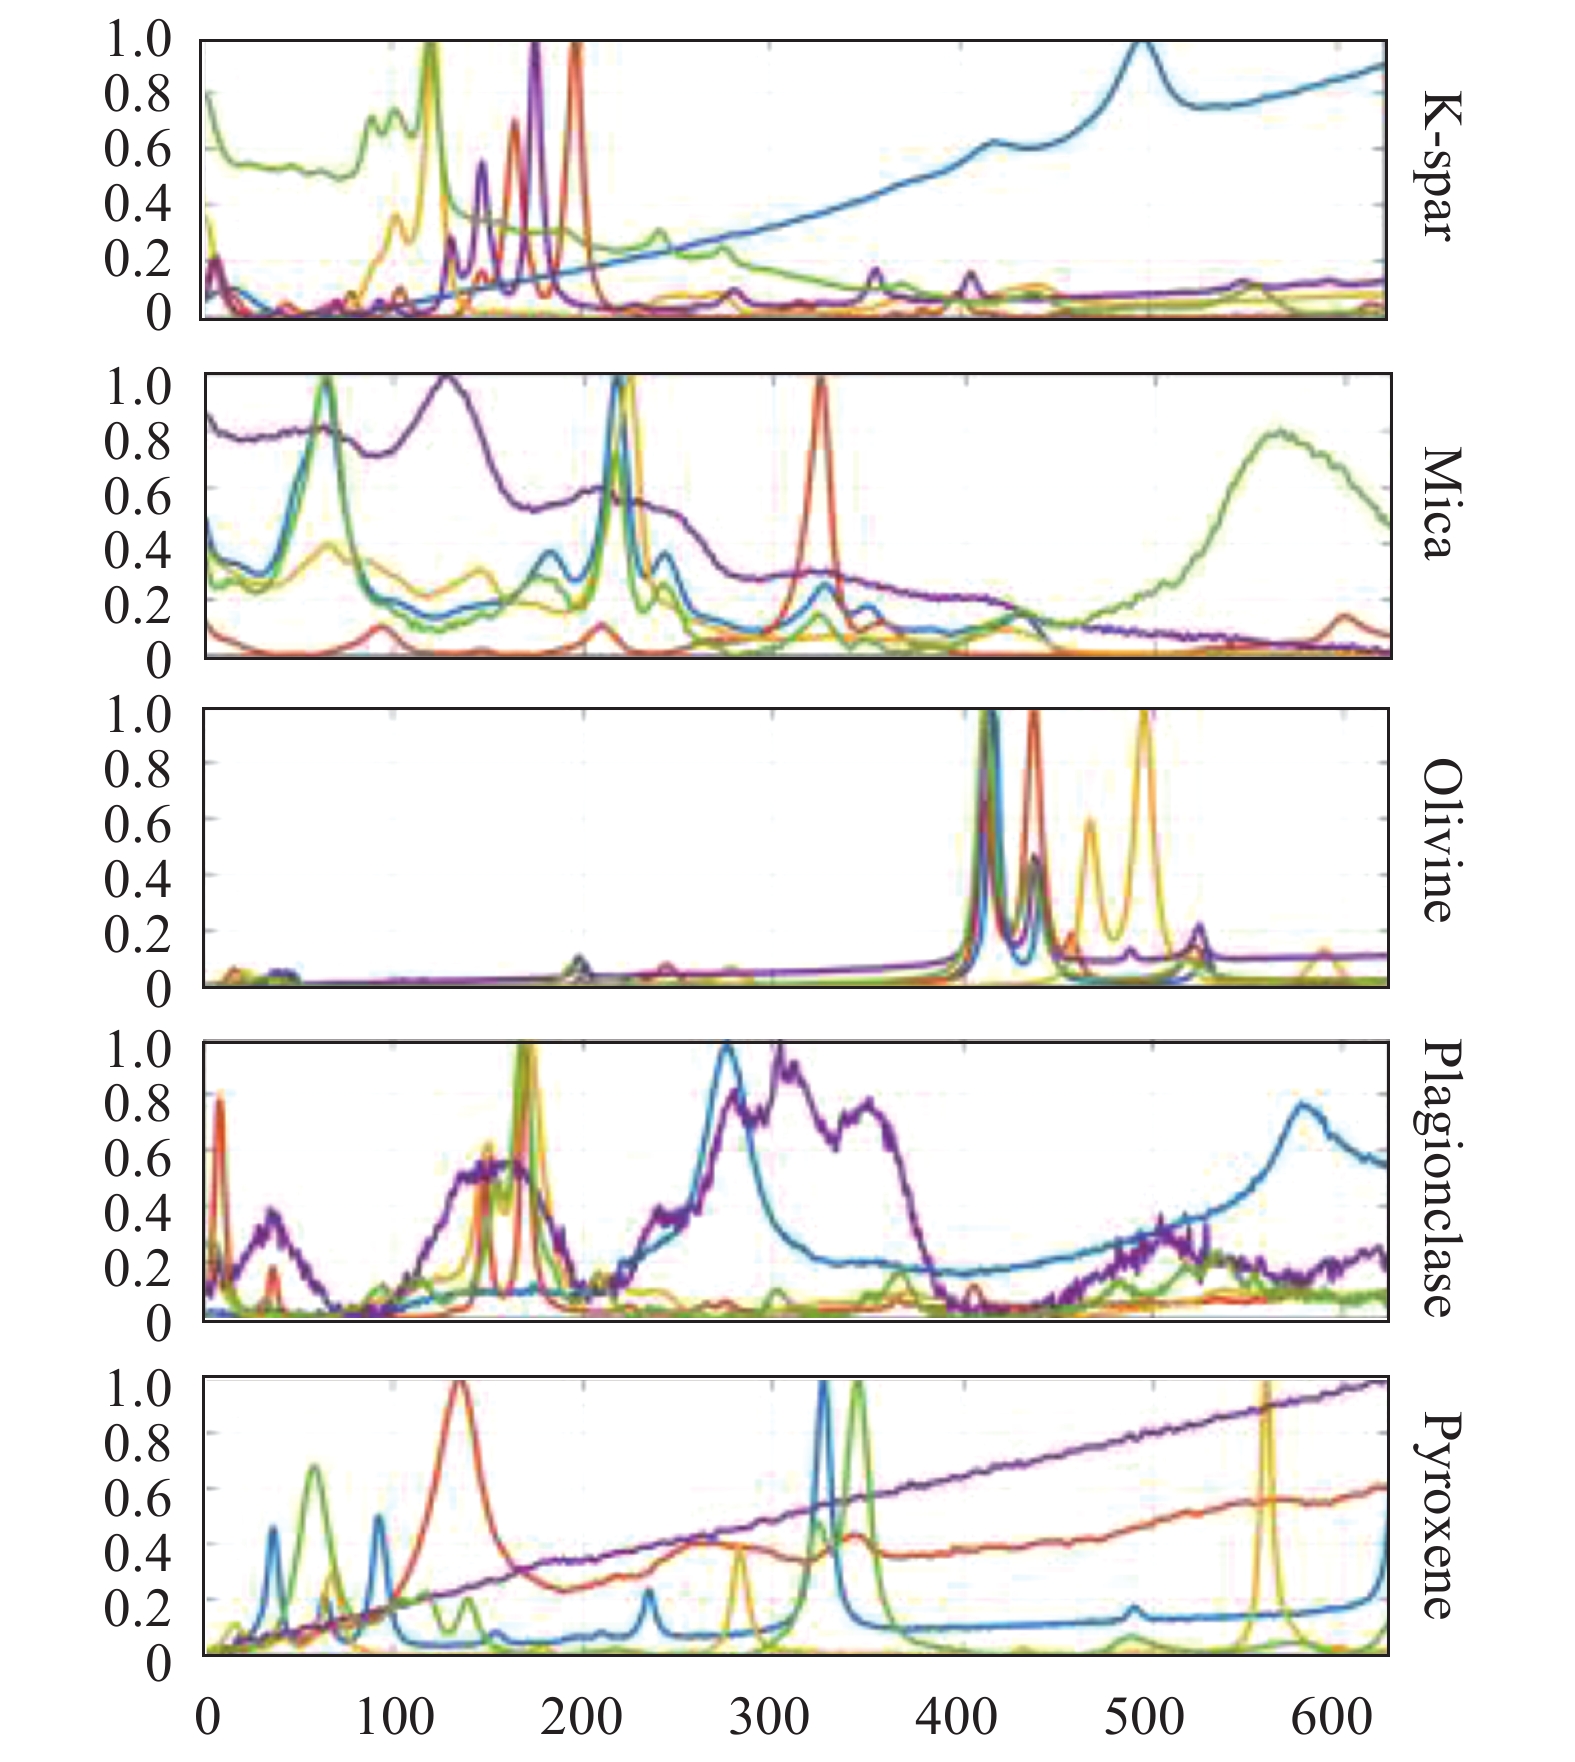 Part of the spectrum data in dataset